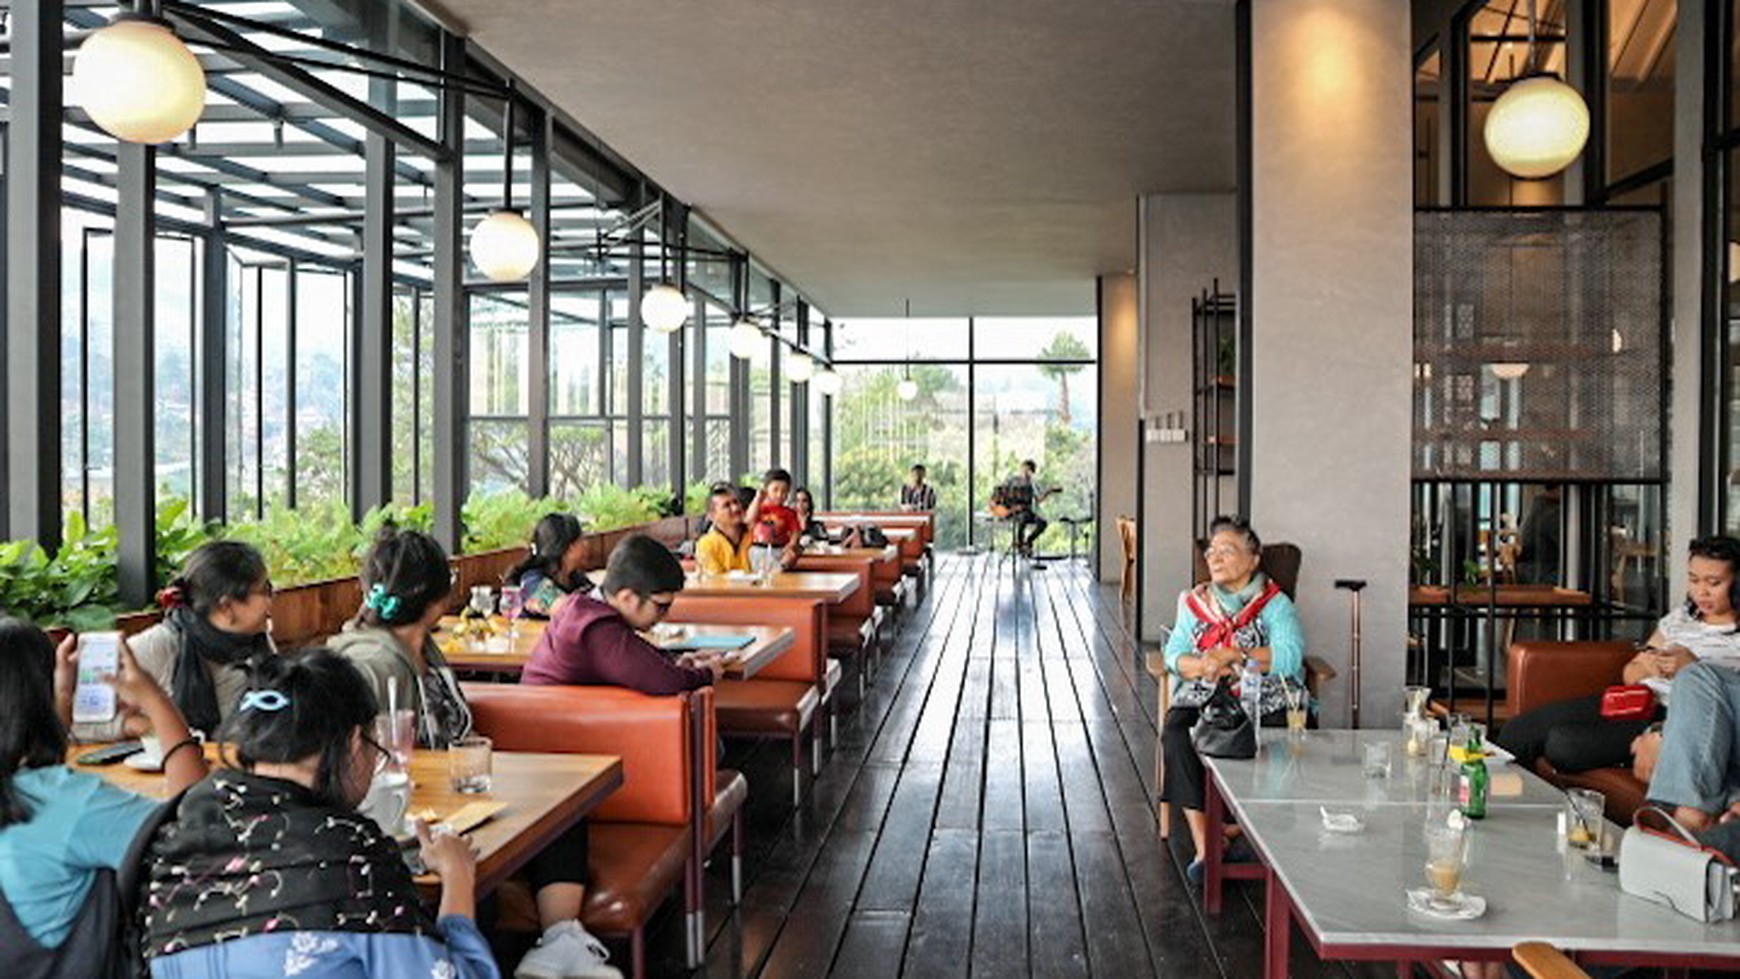 Dijual Art Galery, Cafe, Resto & Villa with scenic view di Bandung 